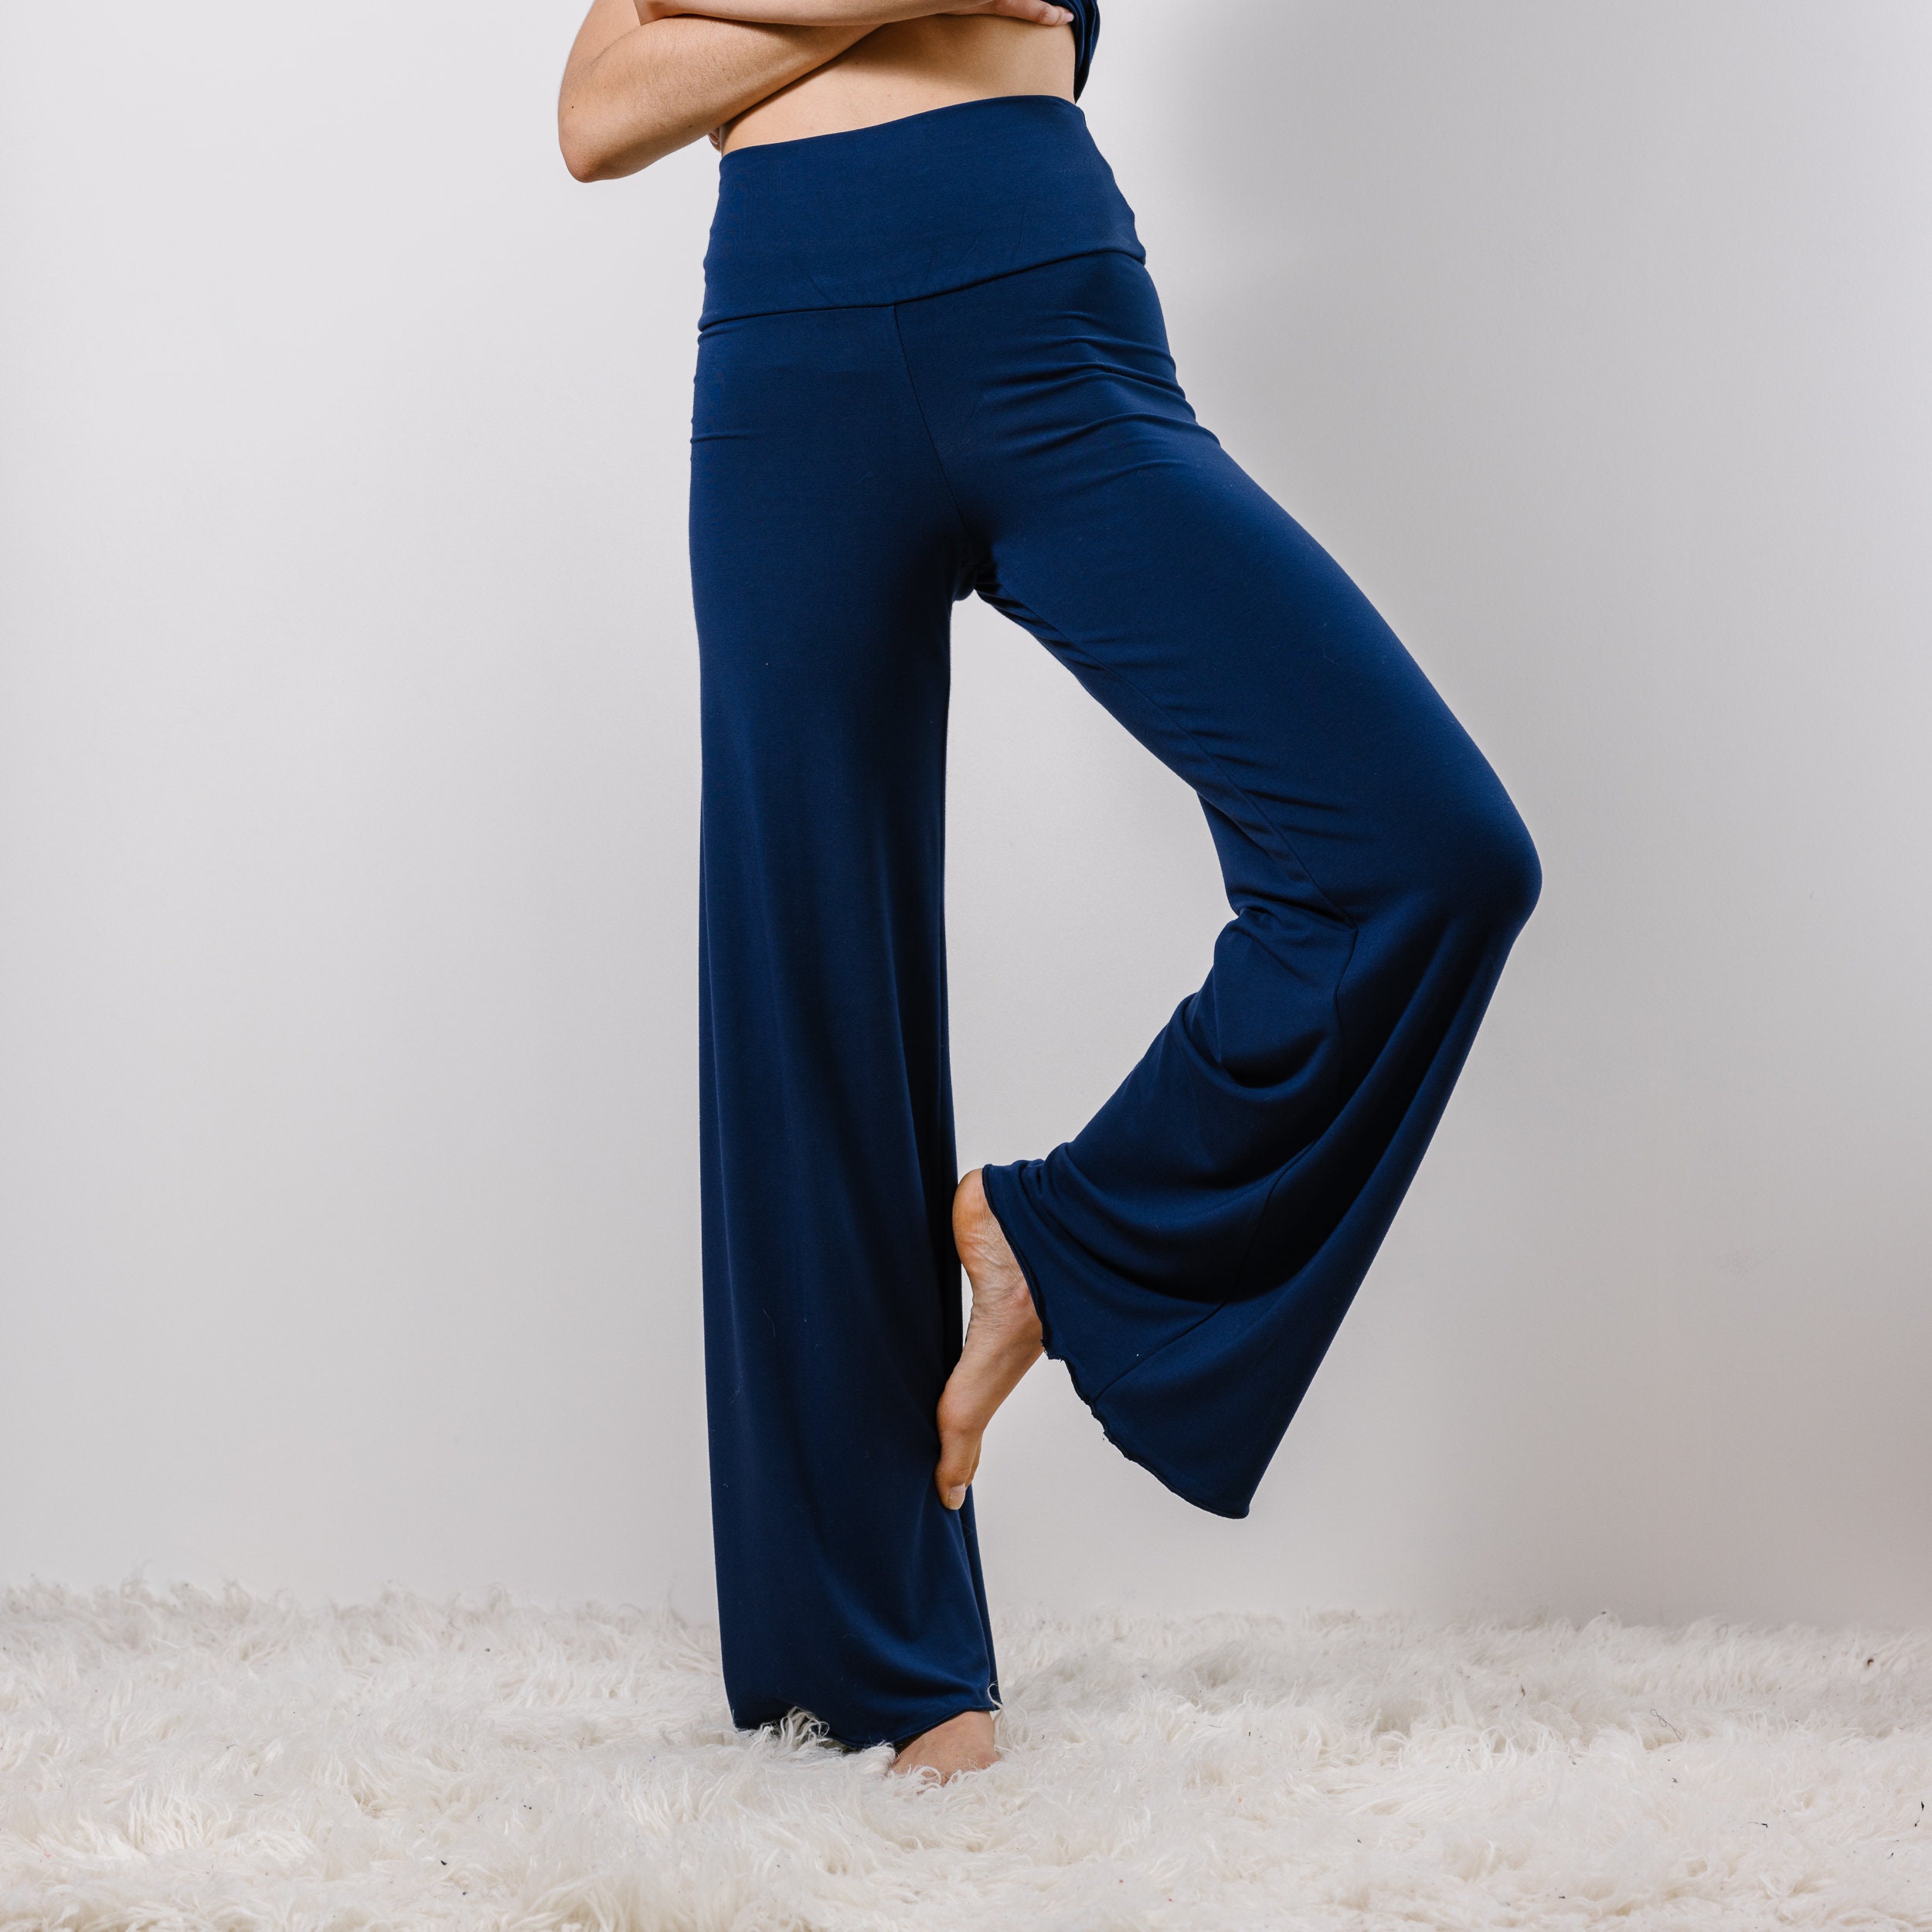 Capreze Womens Yoga Dress Pants Stretchy Flare Bell Bottoms